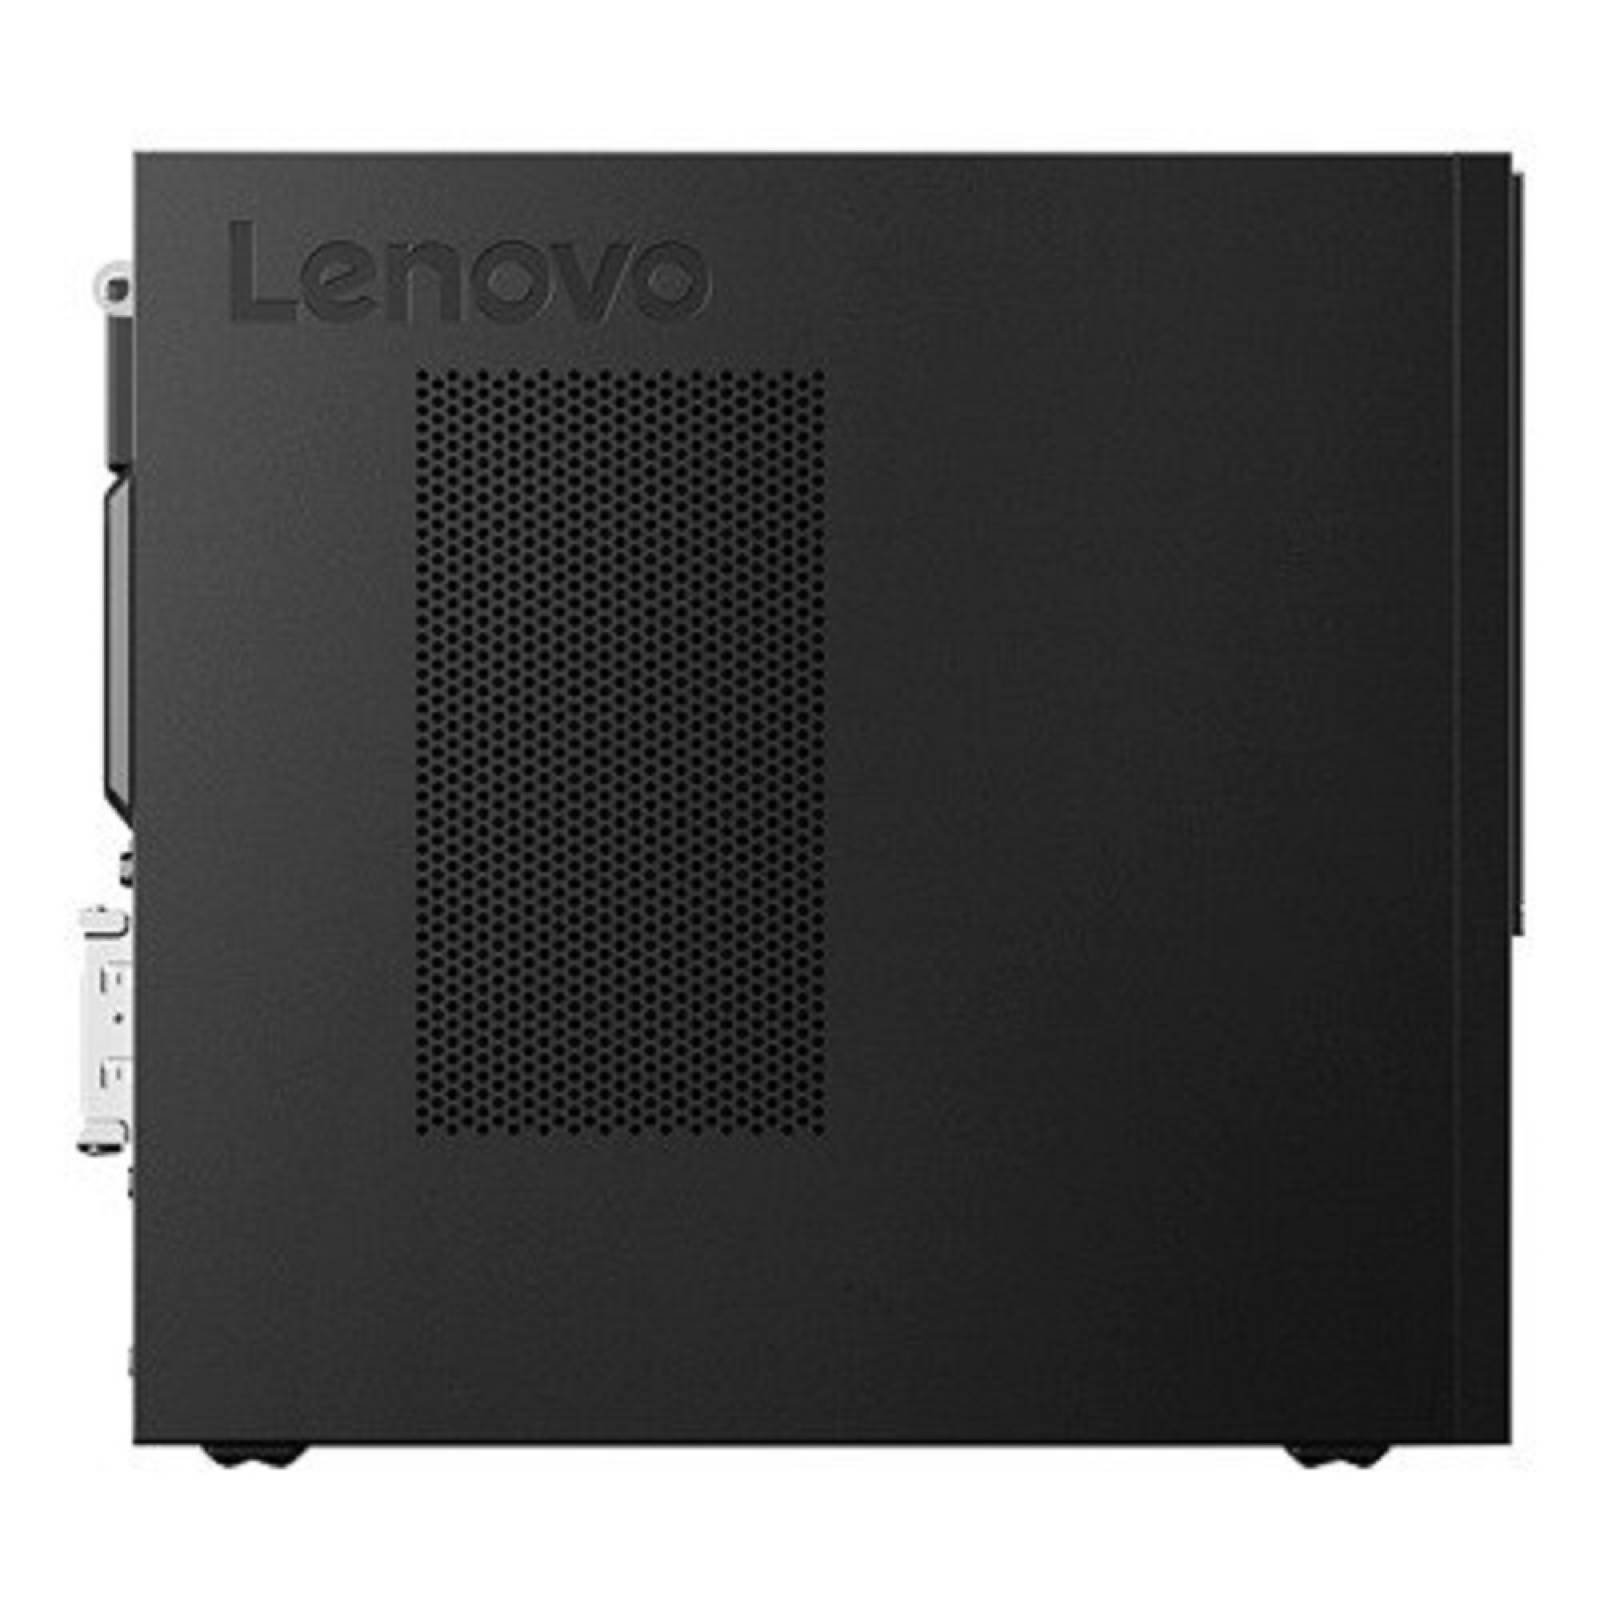 PC Lenovo Intel i7-8700 8 GB RAM DDR4 1TB HDD V530s